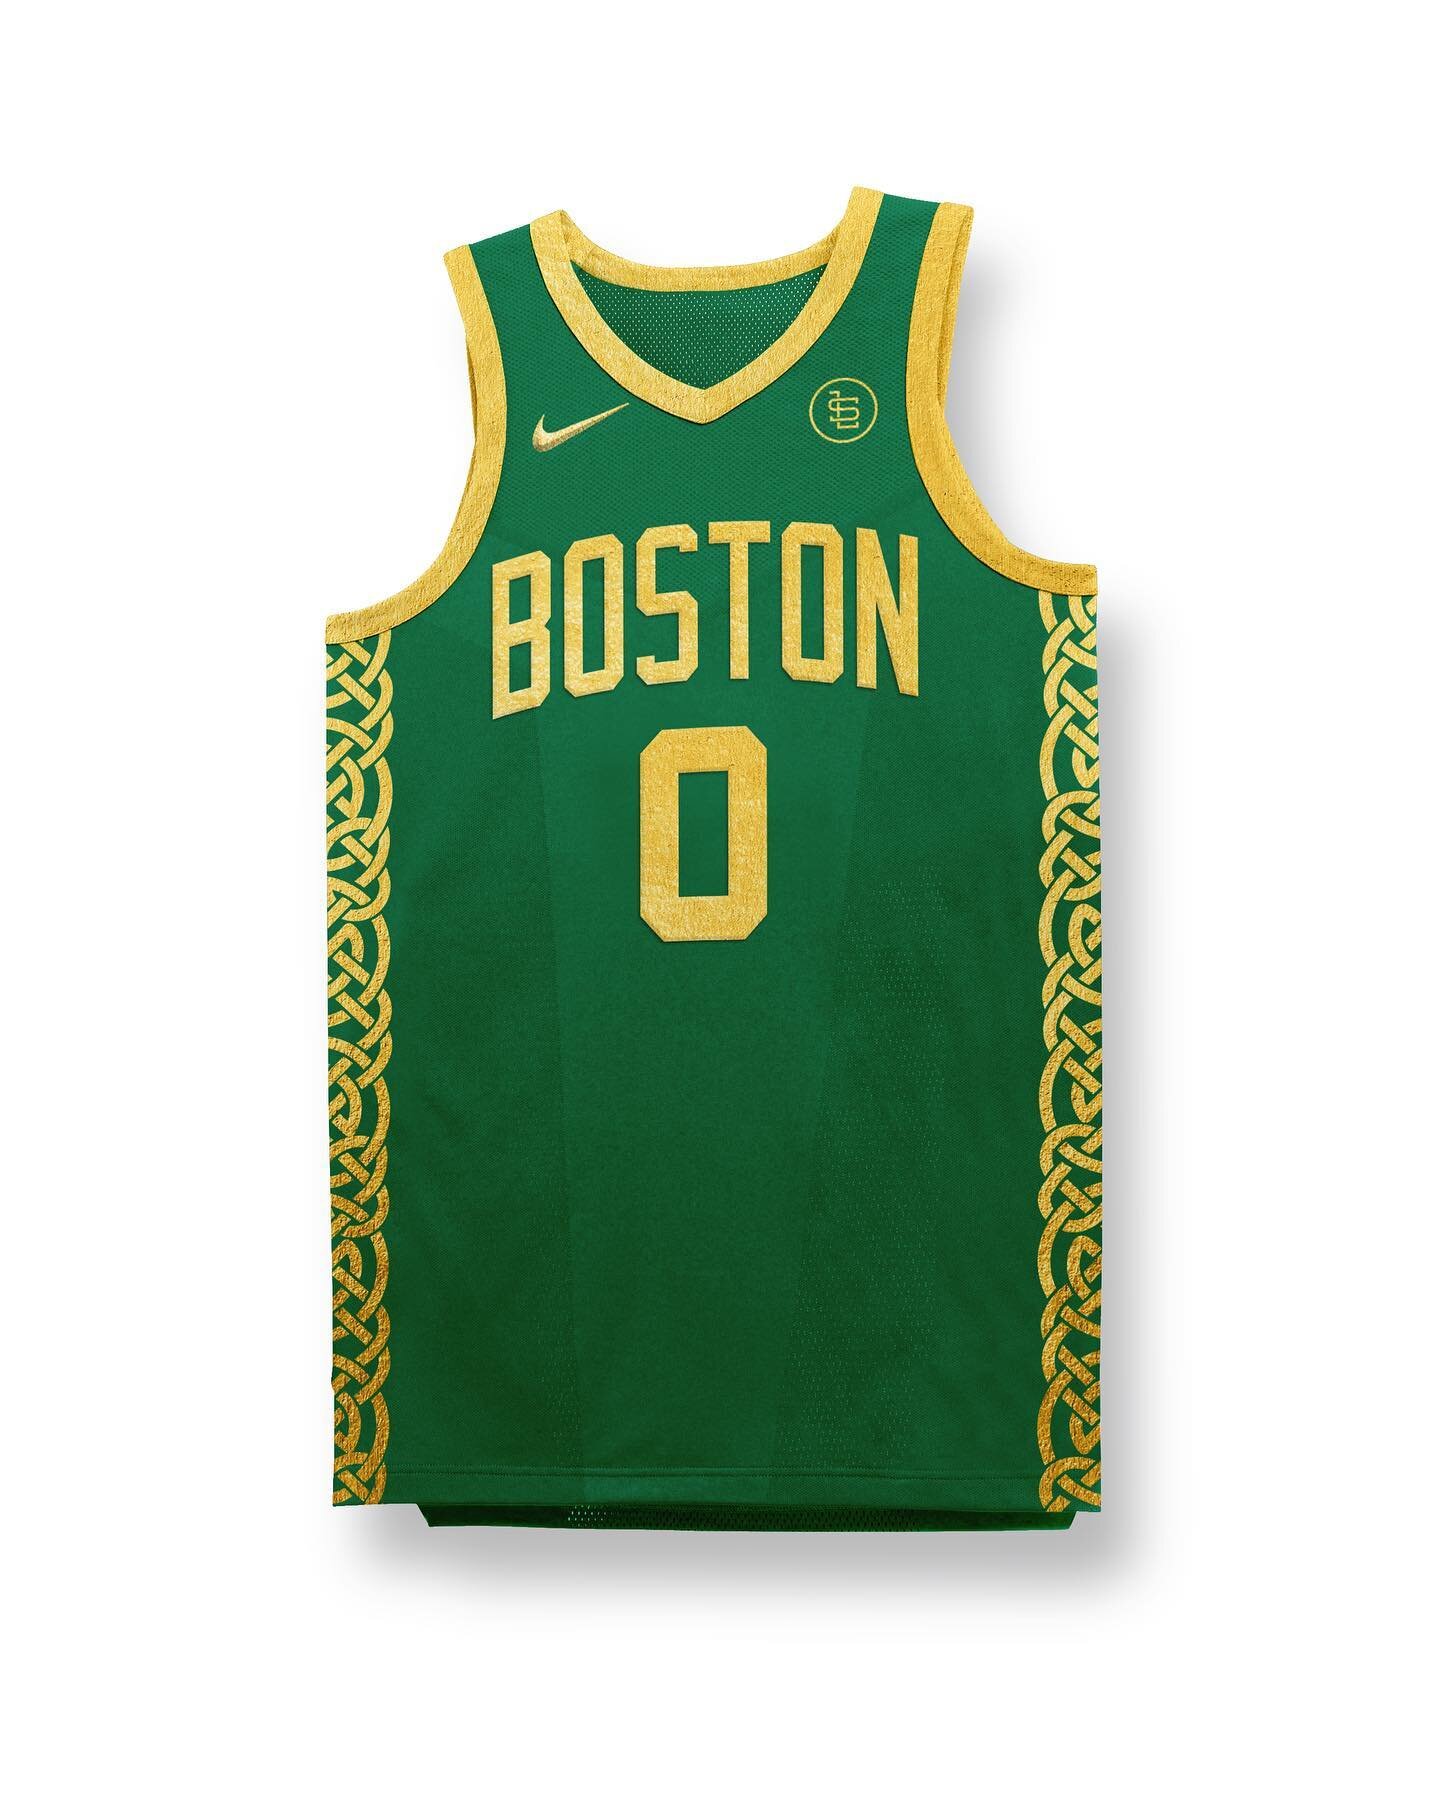 Celtics concept, happy St.Patrick&rsquo;s day everyone ☘️
.
.
.
#boston #celtics #celticsnation #bostonceltics #stpatricksday #nba #jasontatum #tatum #celticsbasketball #nikebasketball